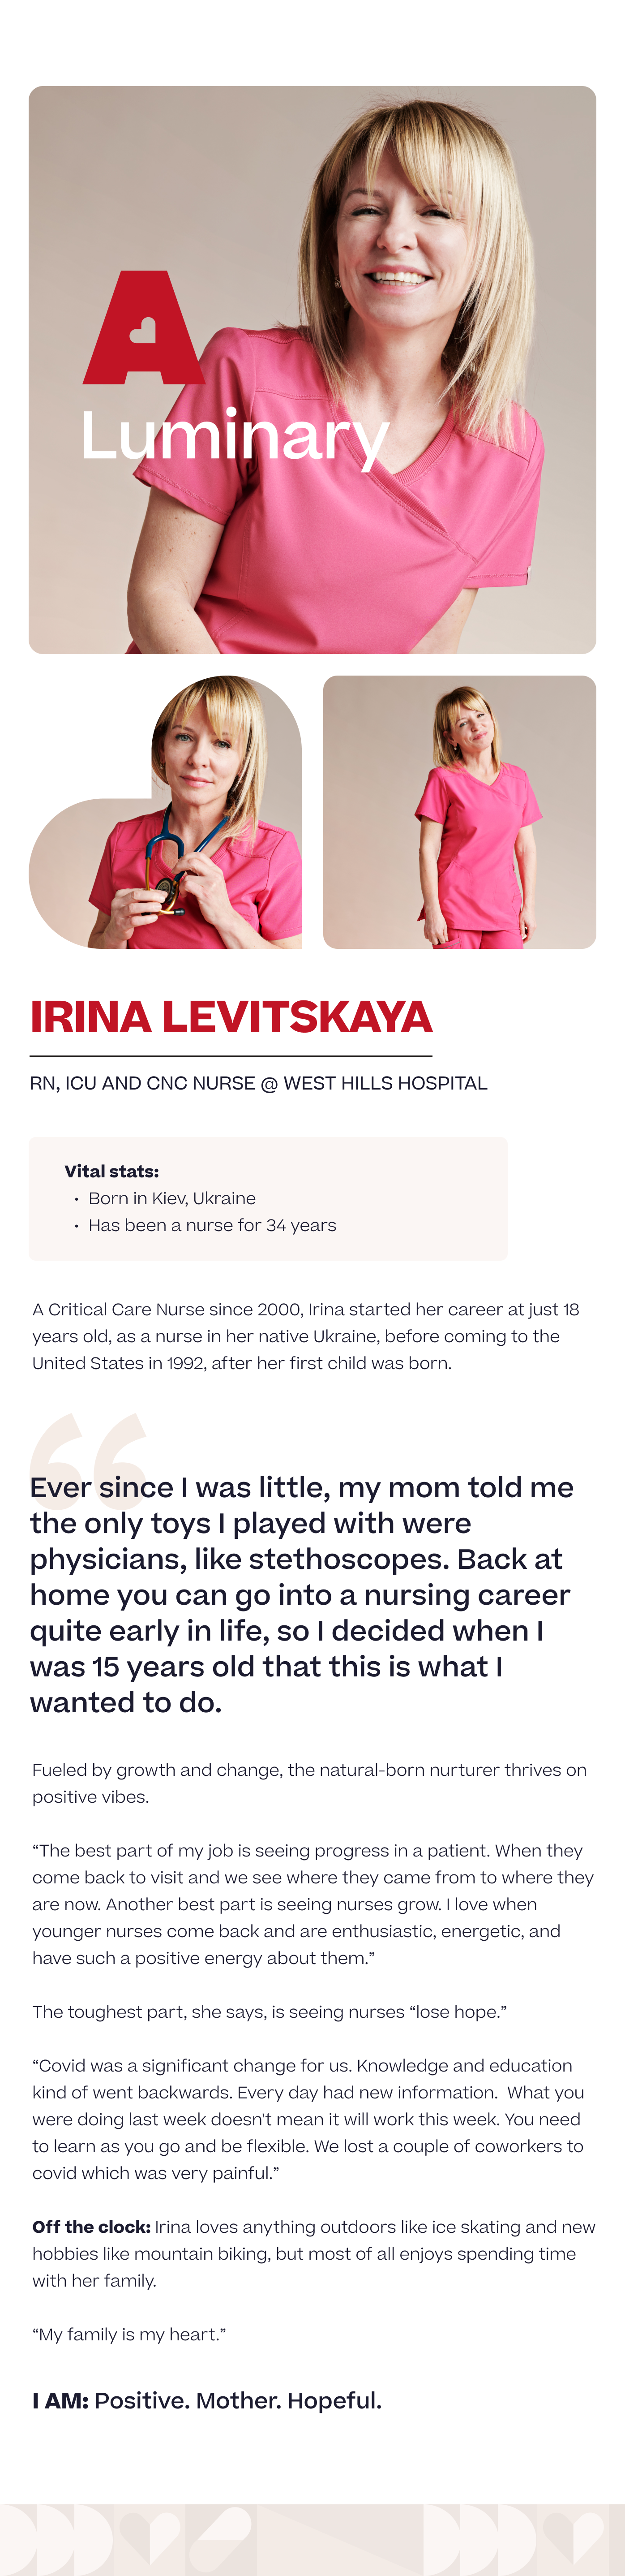 About Irina Levitskaya, RN, ICU and CNC nurse at West Hills Hospital.